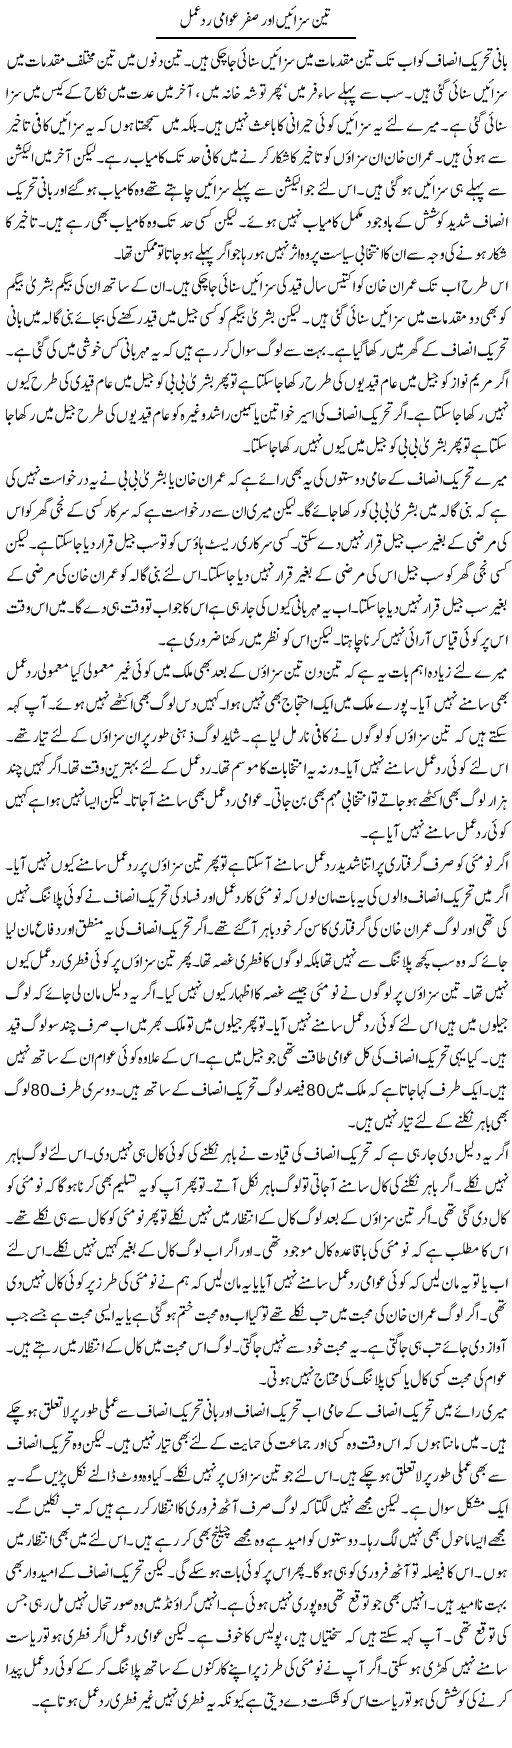 Muzammil Suherwardy Column About Imran Khan Sentences And Reaction of People of Pakistan